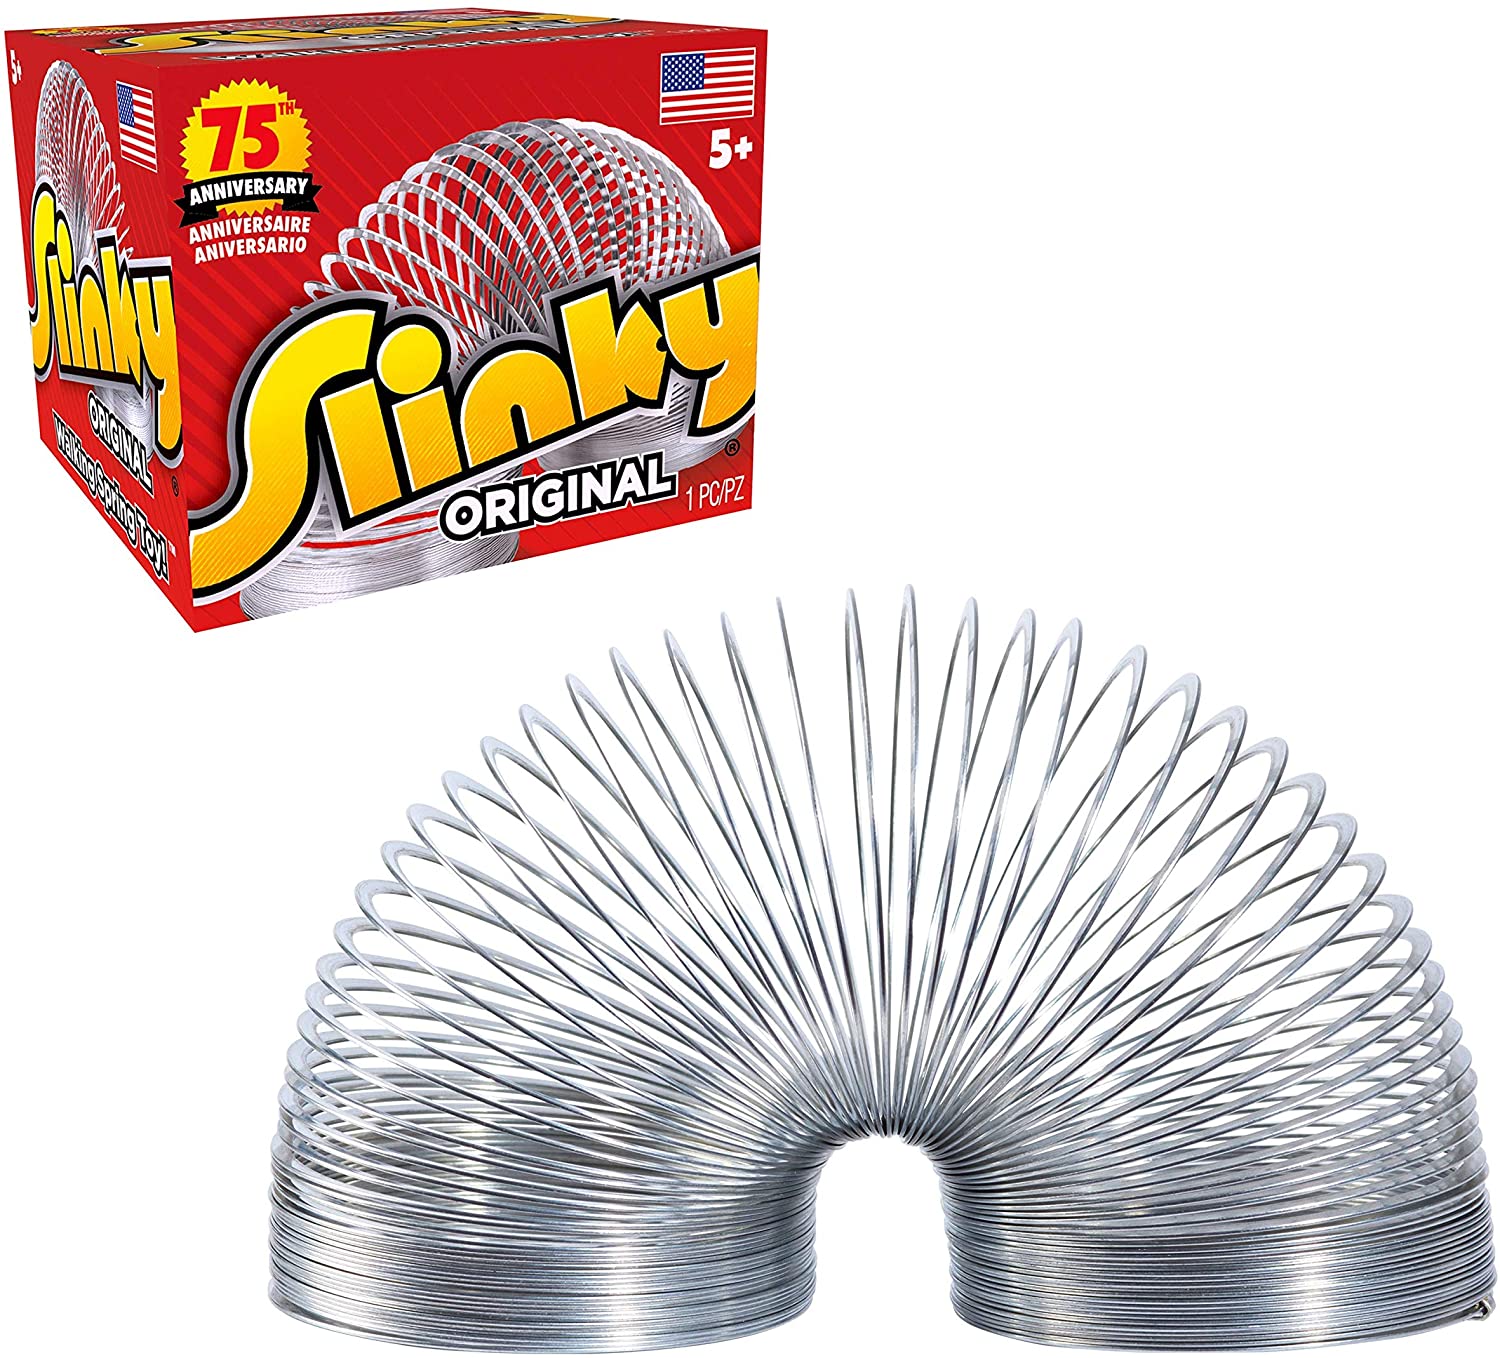 Slinky Original - Treasure Island Toys